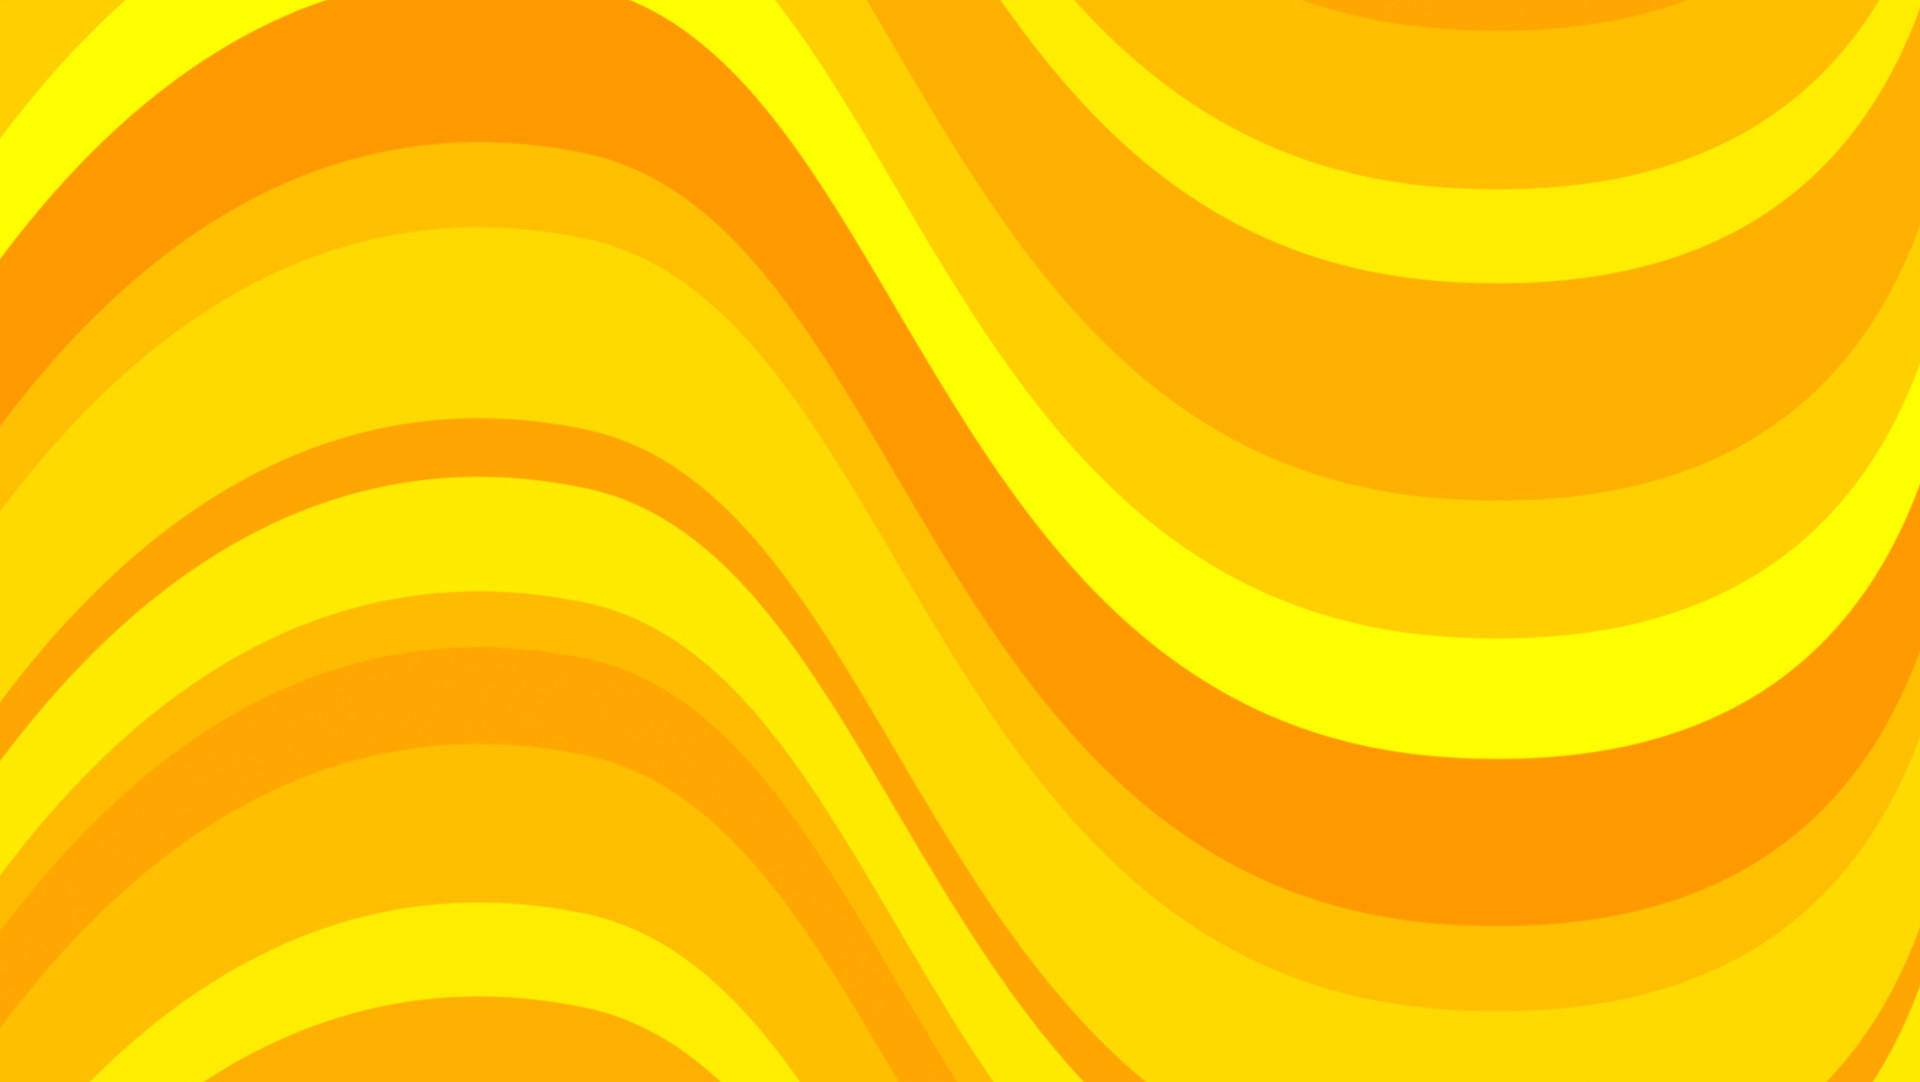 Waves Orange And Yellow Hd